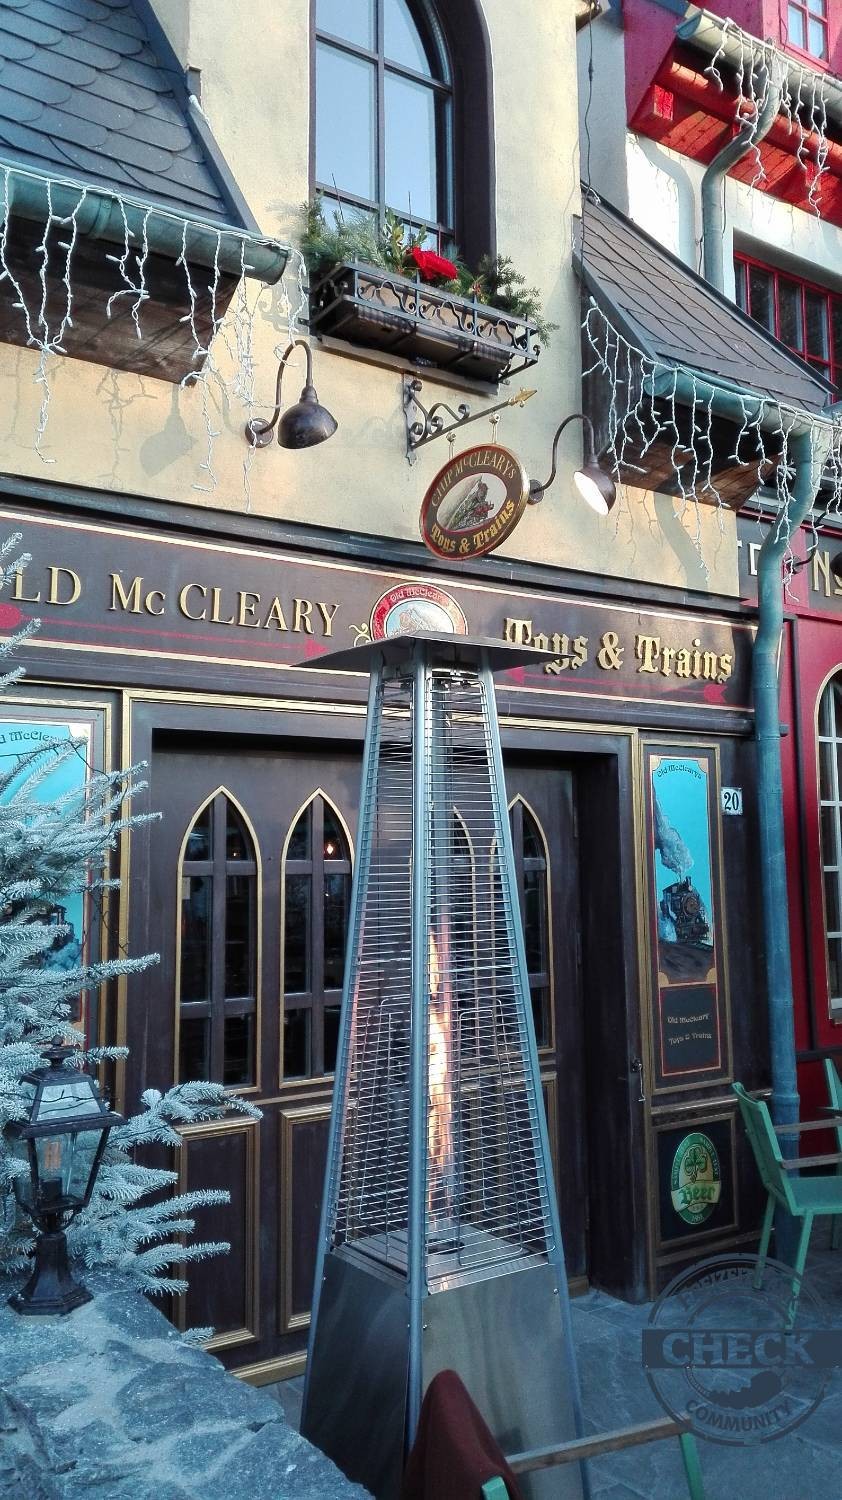 The O’ Mackay’s Cafe and Pub